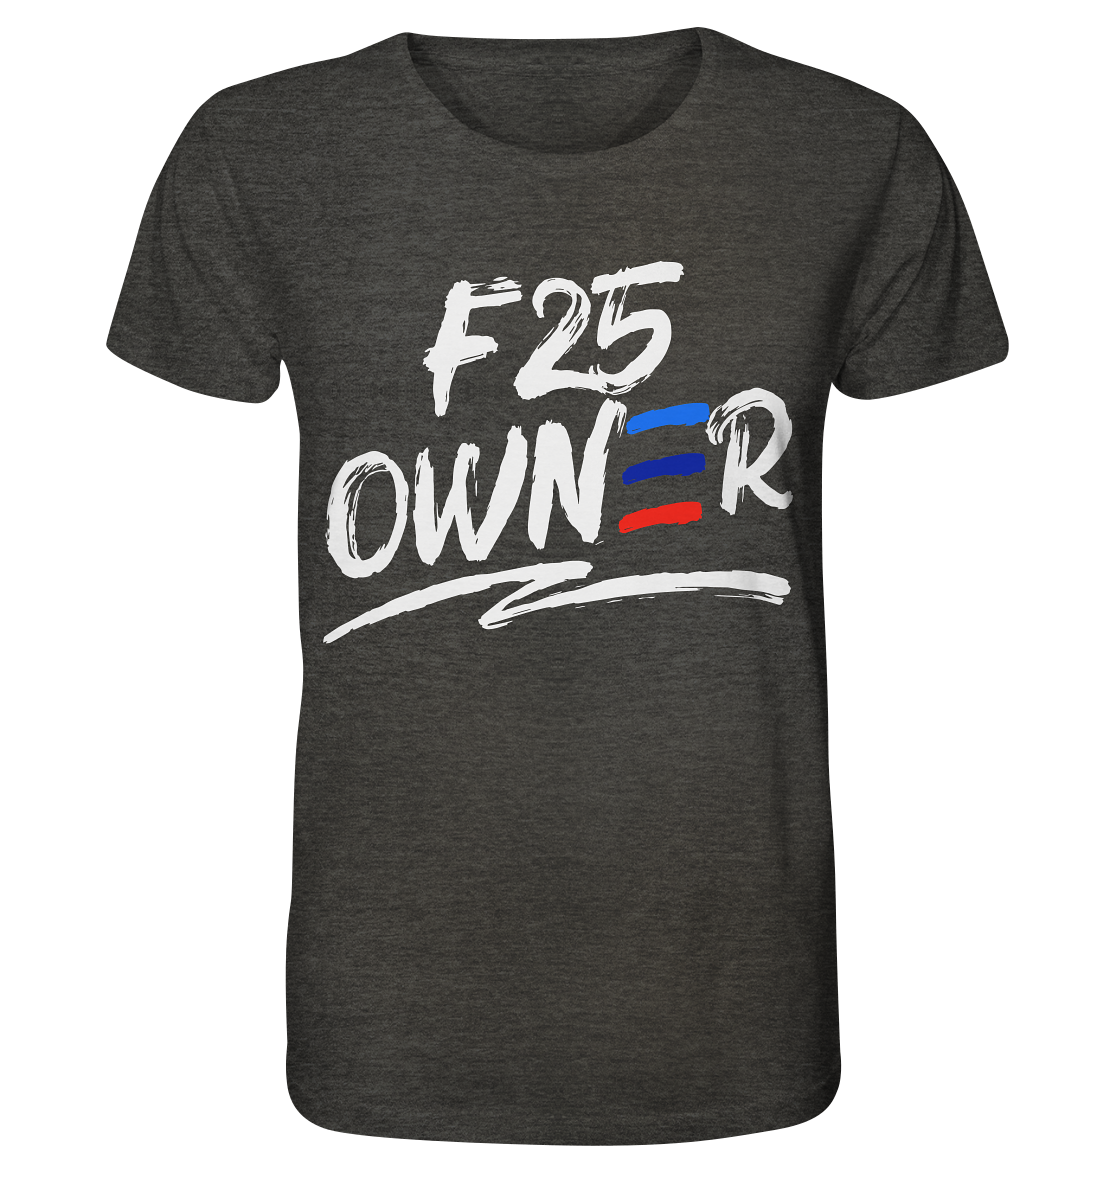 COD_BGKF25OWNER - Organic Shirt (meliert)